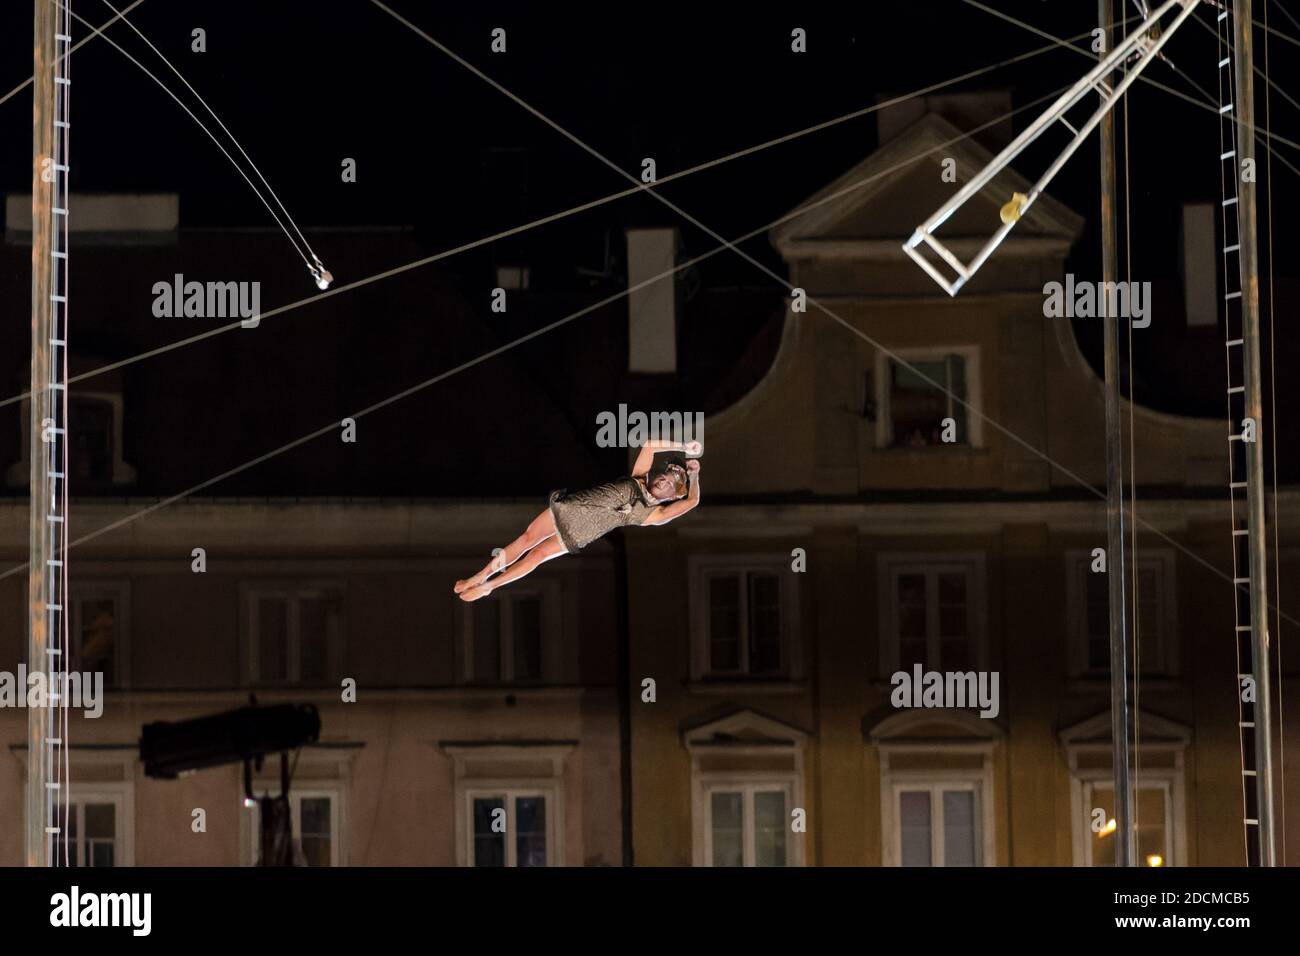 Lublin, Polen - 25. Juli 2014: Les Lendemains akrobaten fällt während der Trapezausstellung im Carnaval Sztukmistrzow nieder Stockfoto